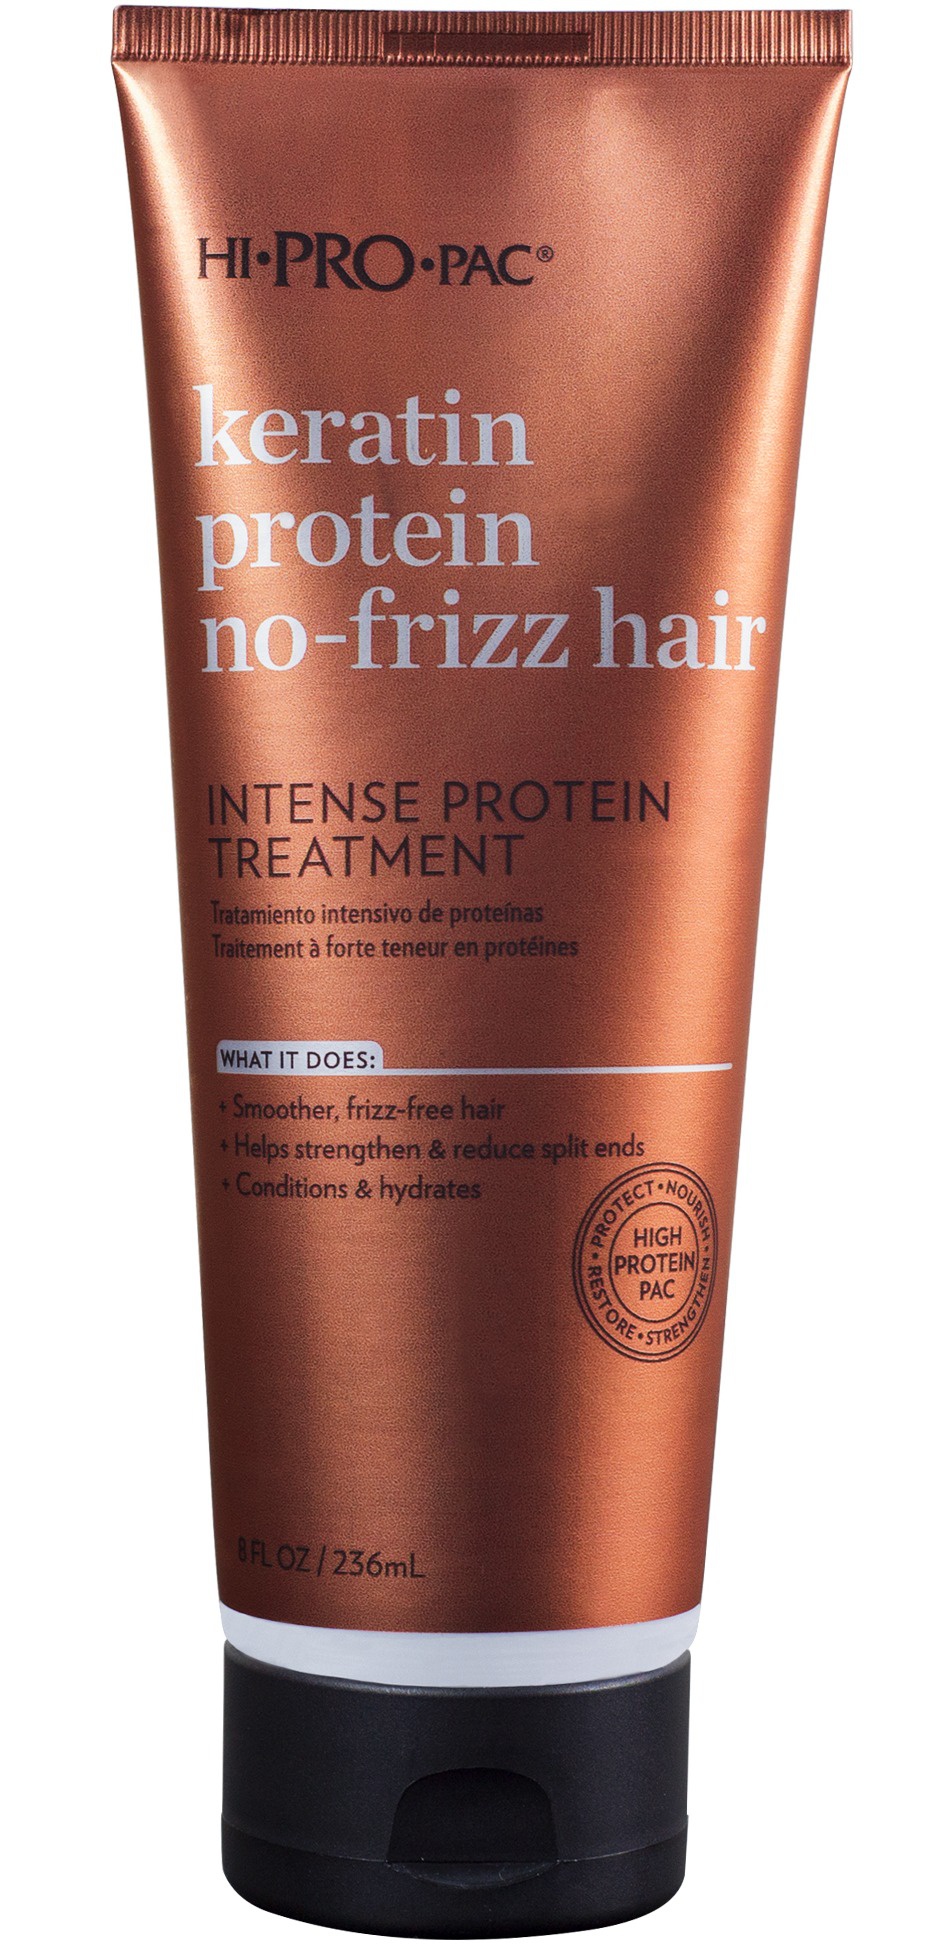 Hi Pro Pac Keratin Protein No Frizz Hair Intense Protein Treatment